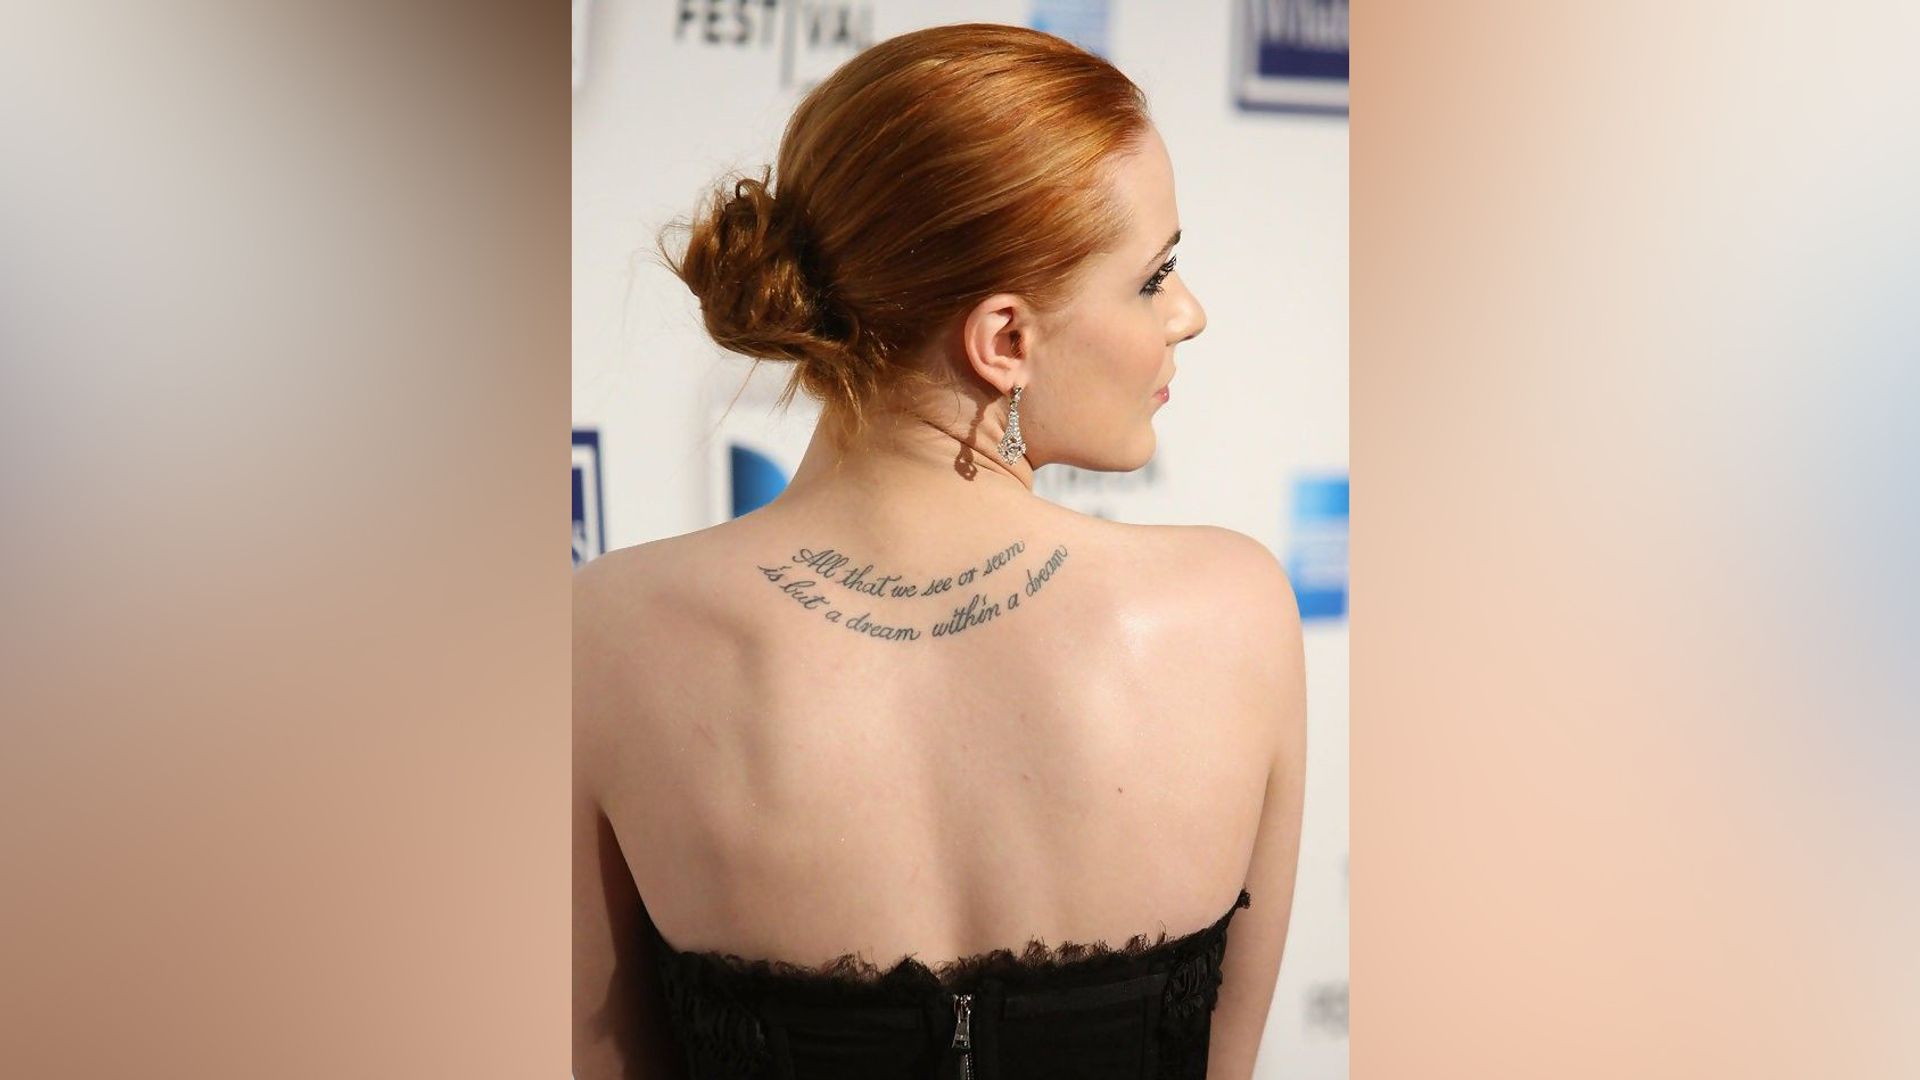 One of Evan Rachel Wood’s many tattoos